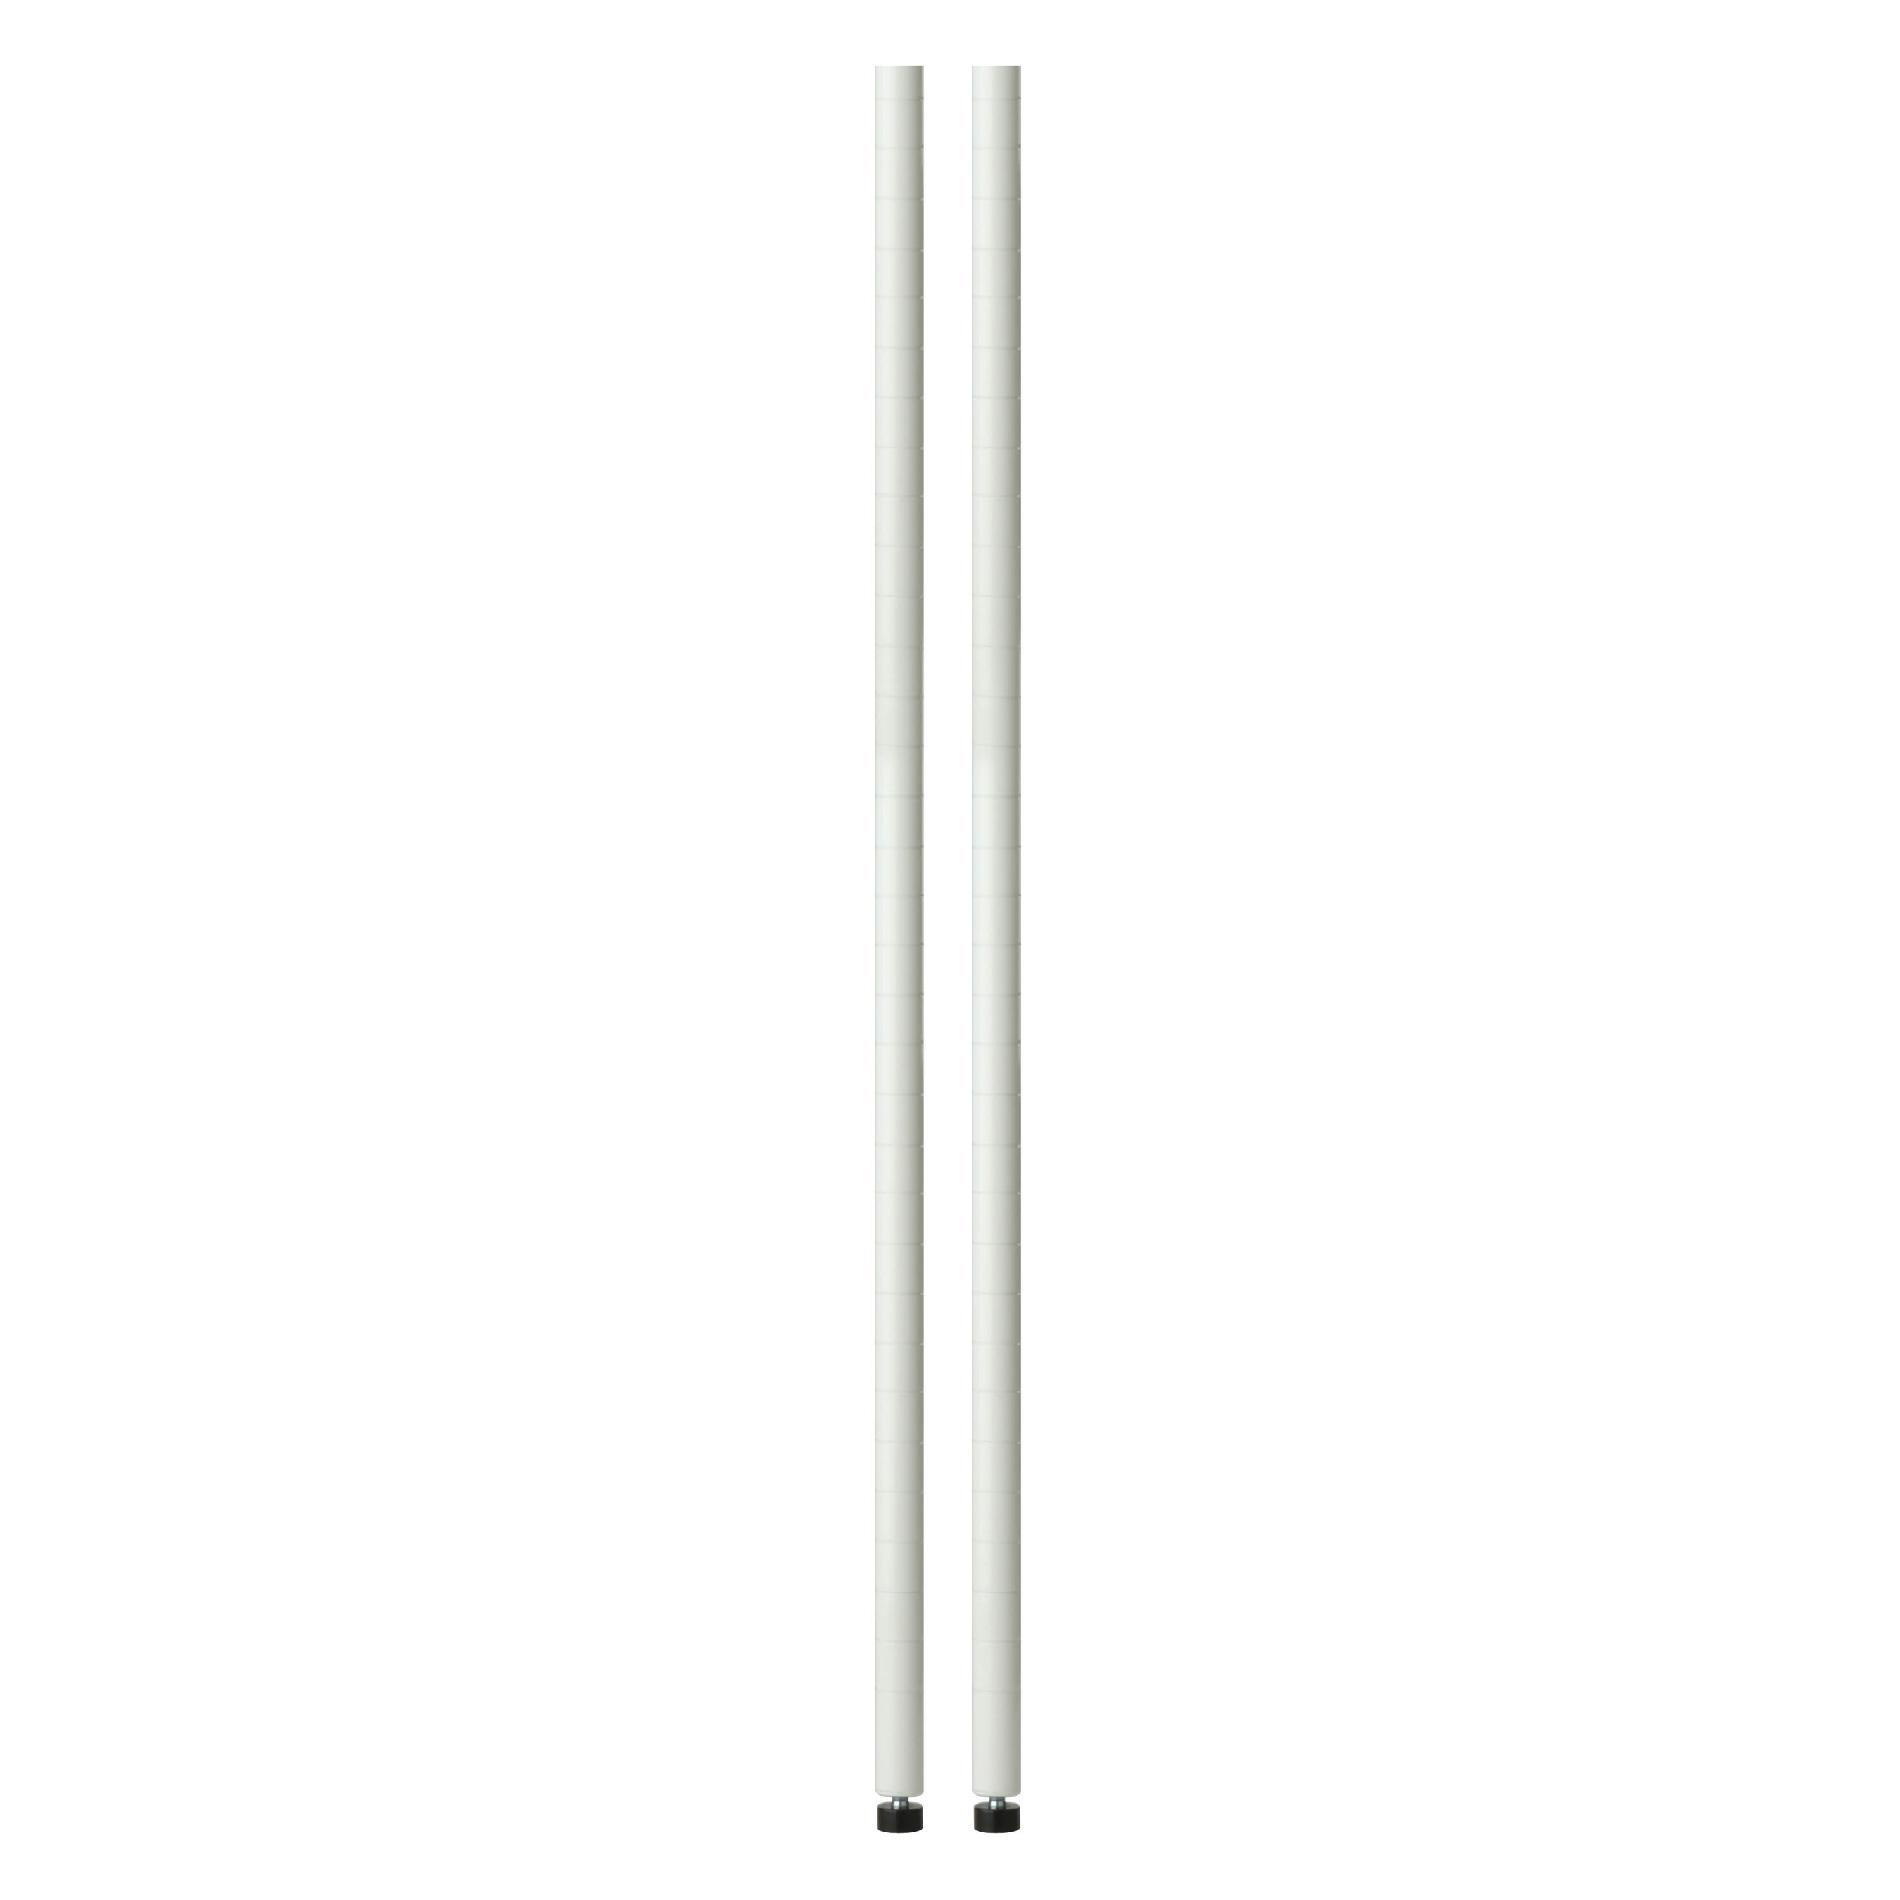 Honey Can Do 48" White Pole with leg levelers - 2pk